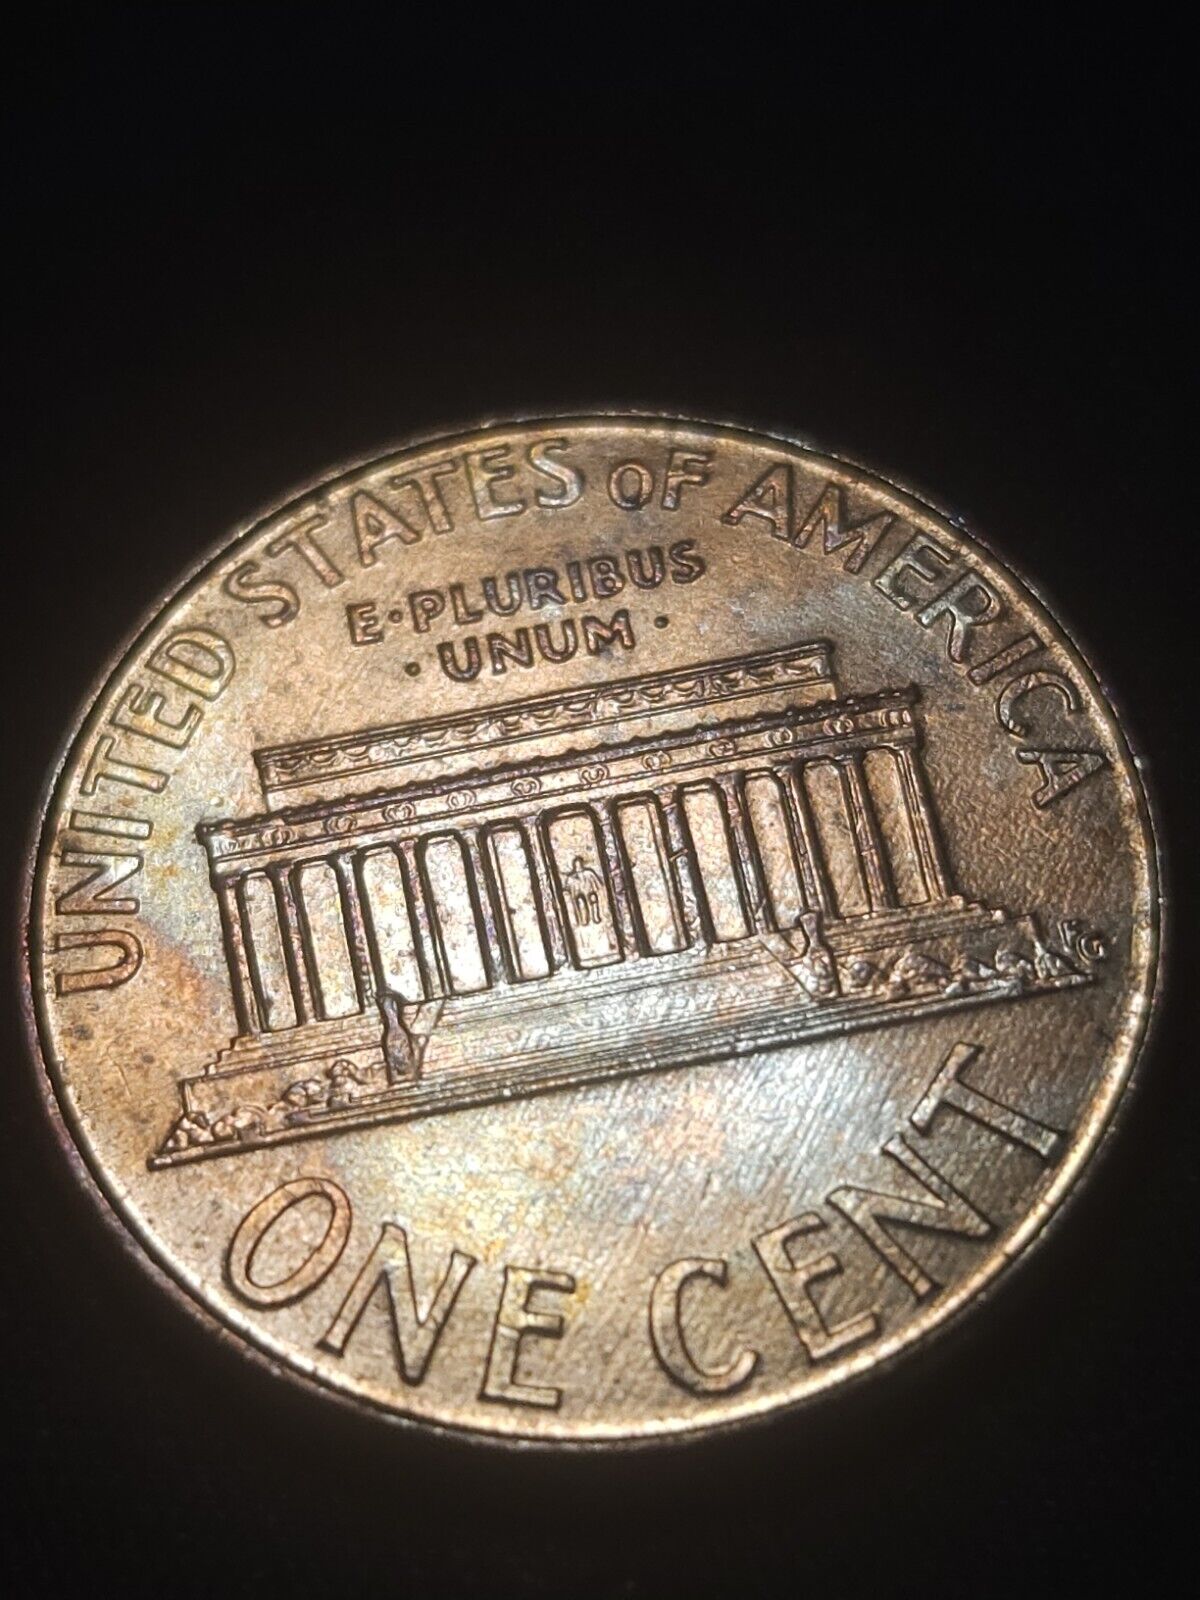 2005 Toned Lincoln Memorial Cent - ErrorsandOddities33